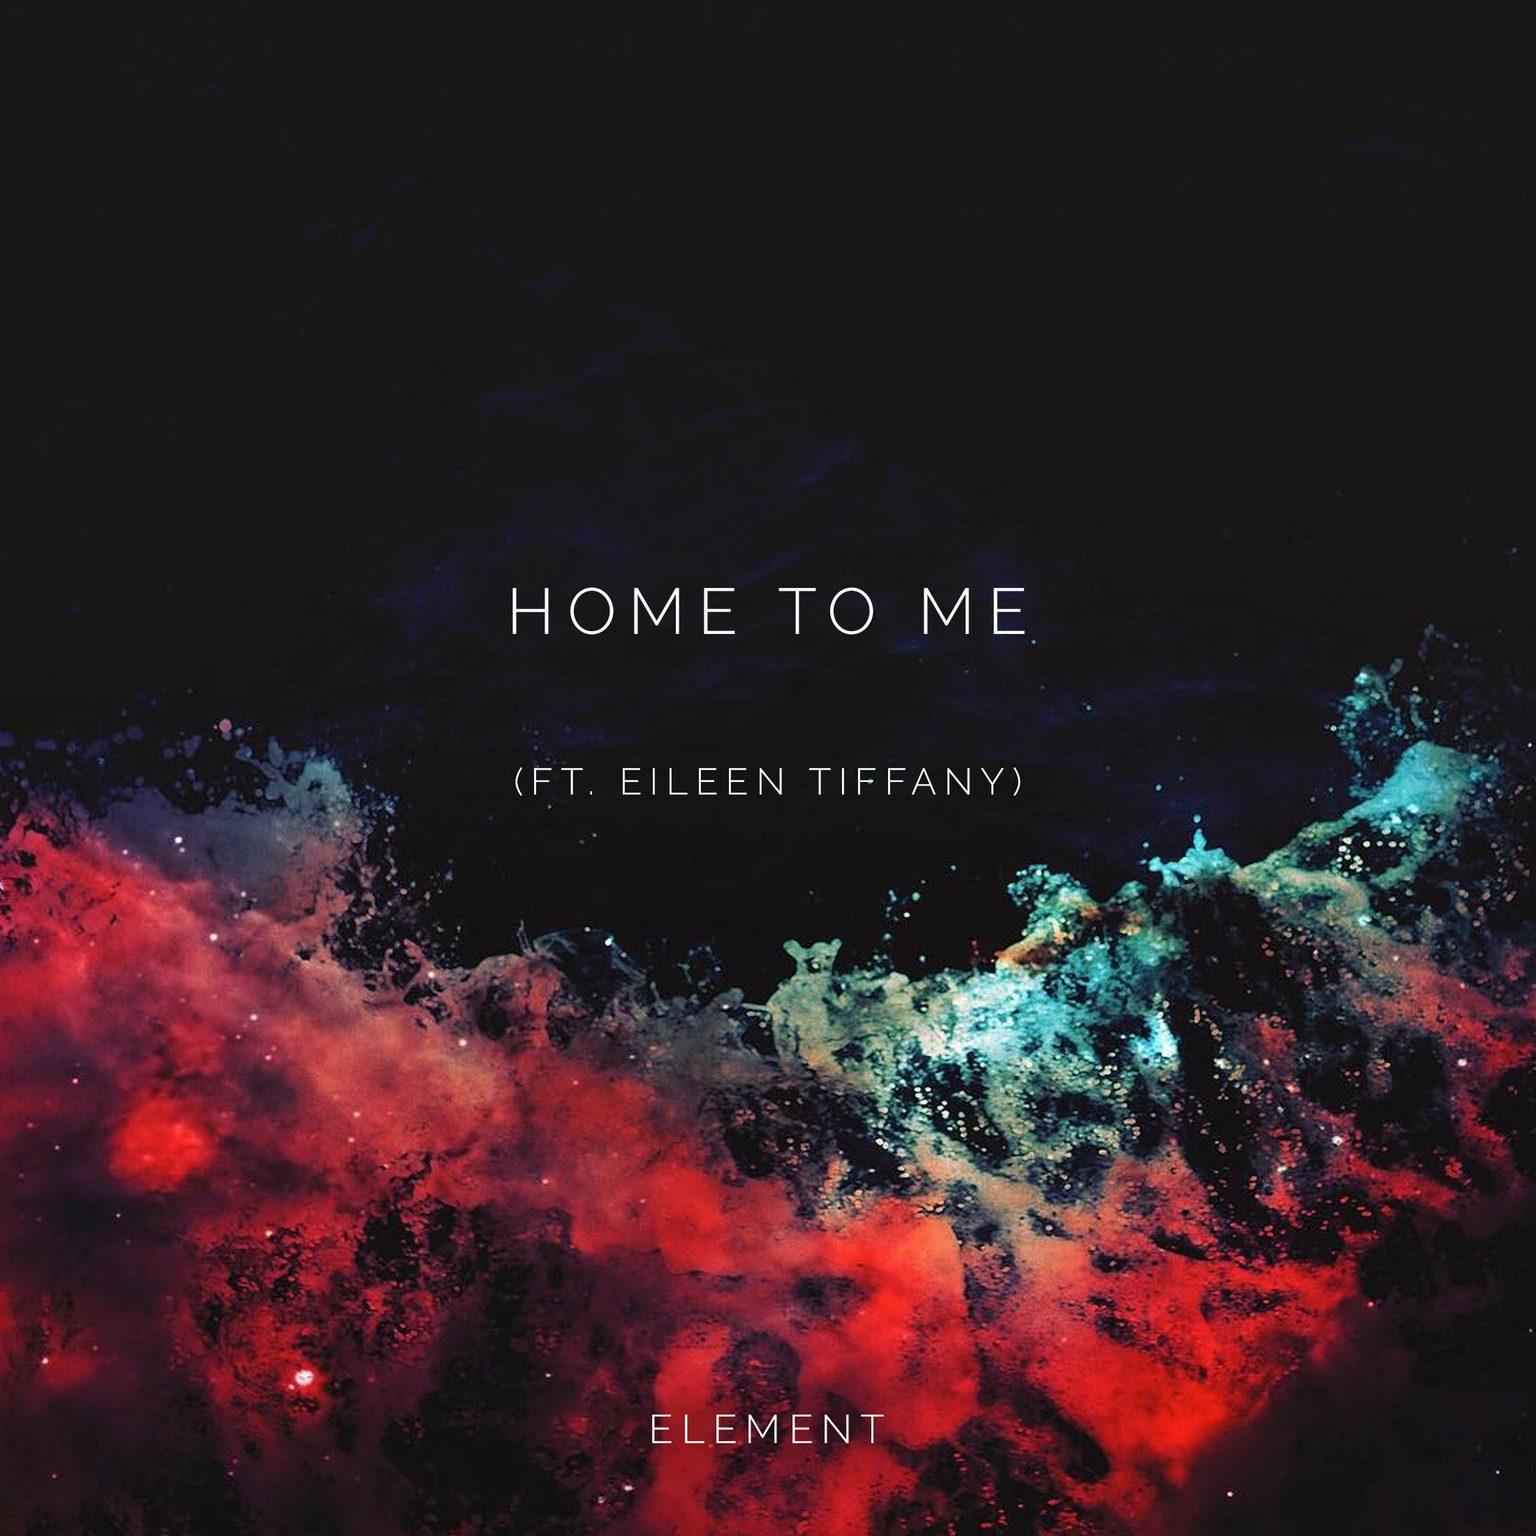 Element – Home to Me (ft. Eileen Tiffany) [Original Mix]Element Hometoeme ARTWORK